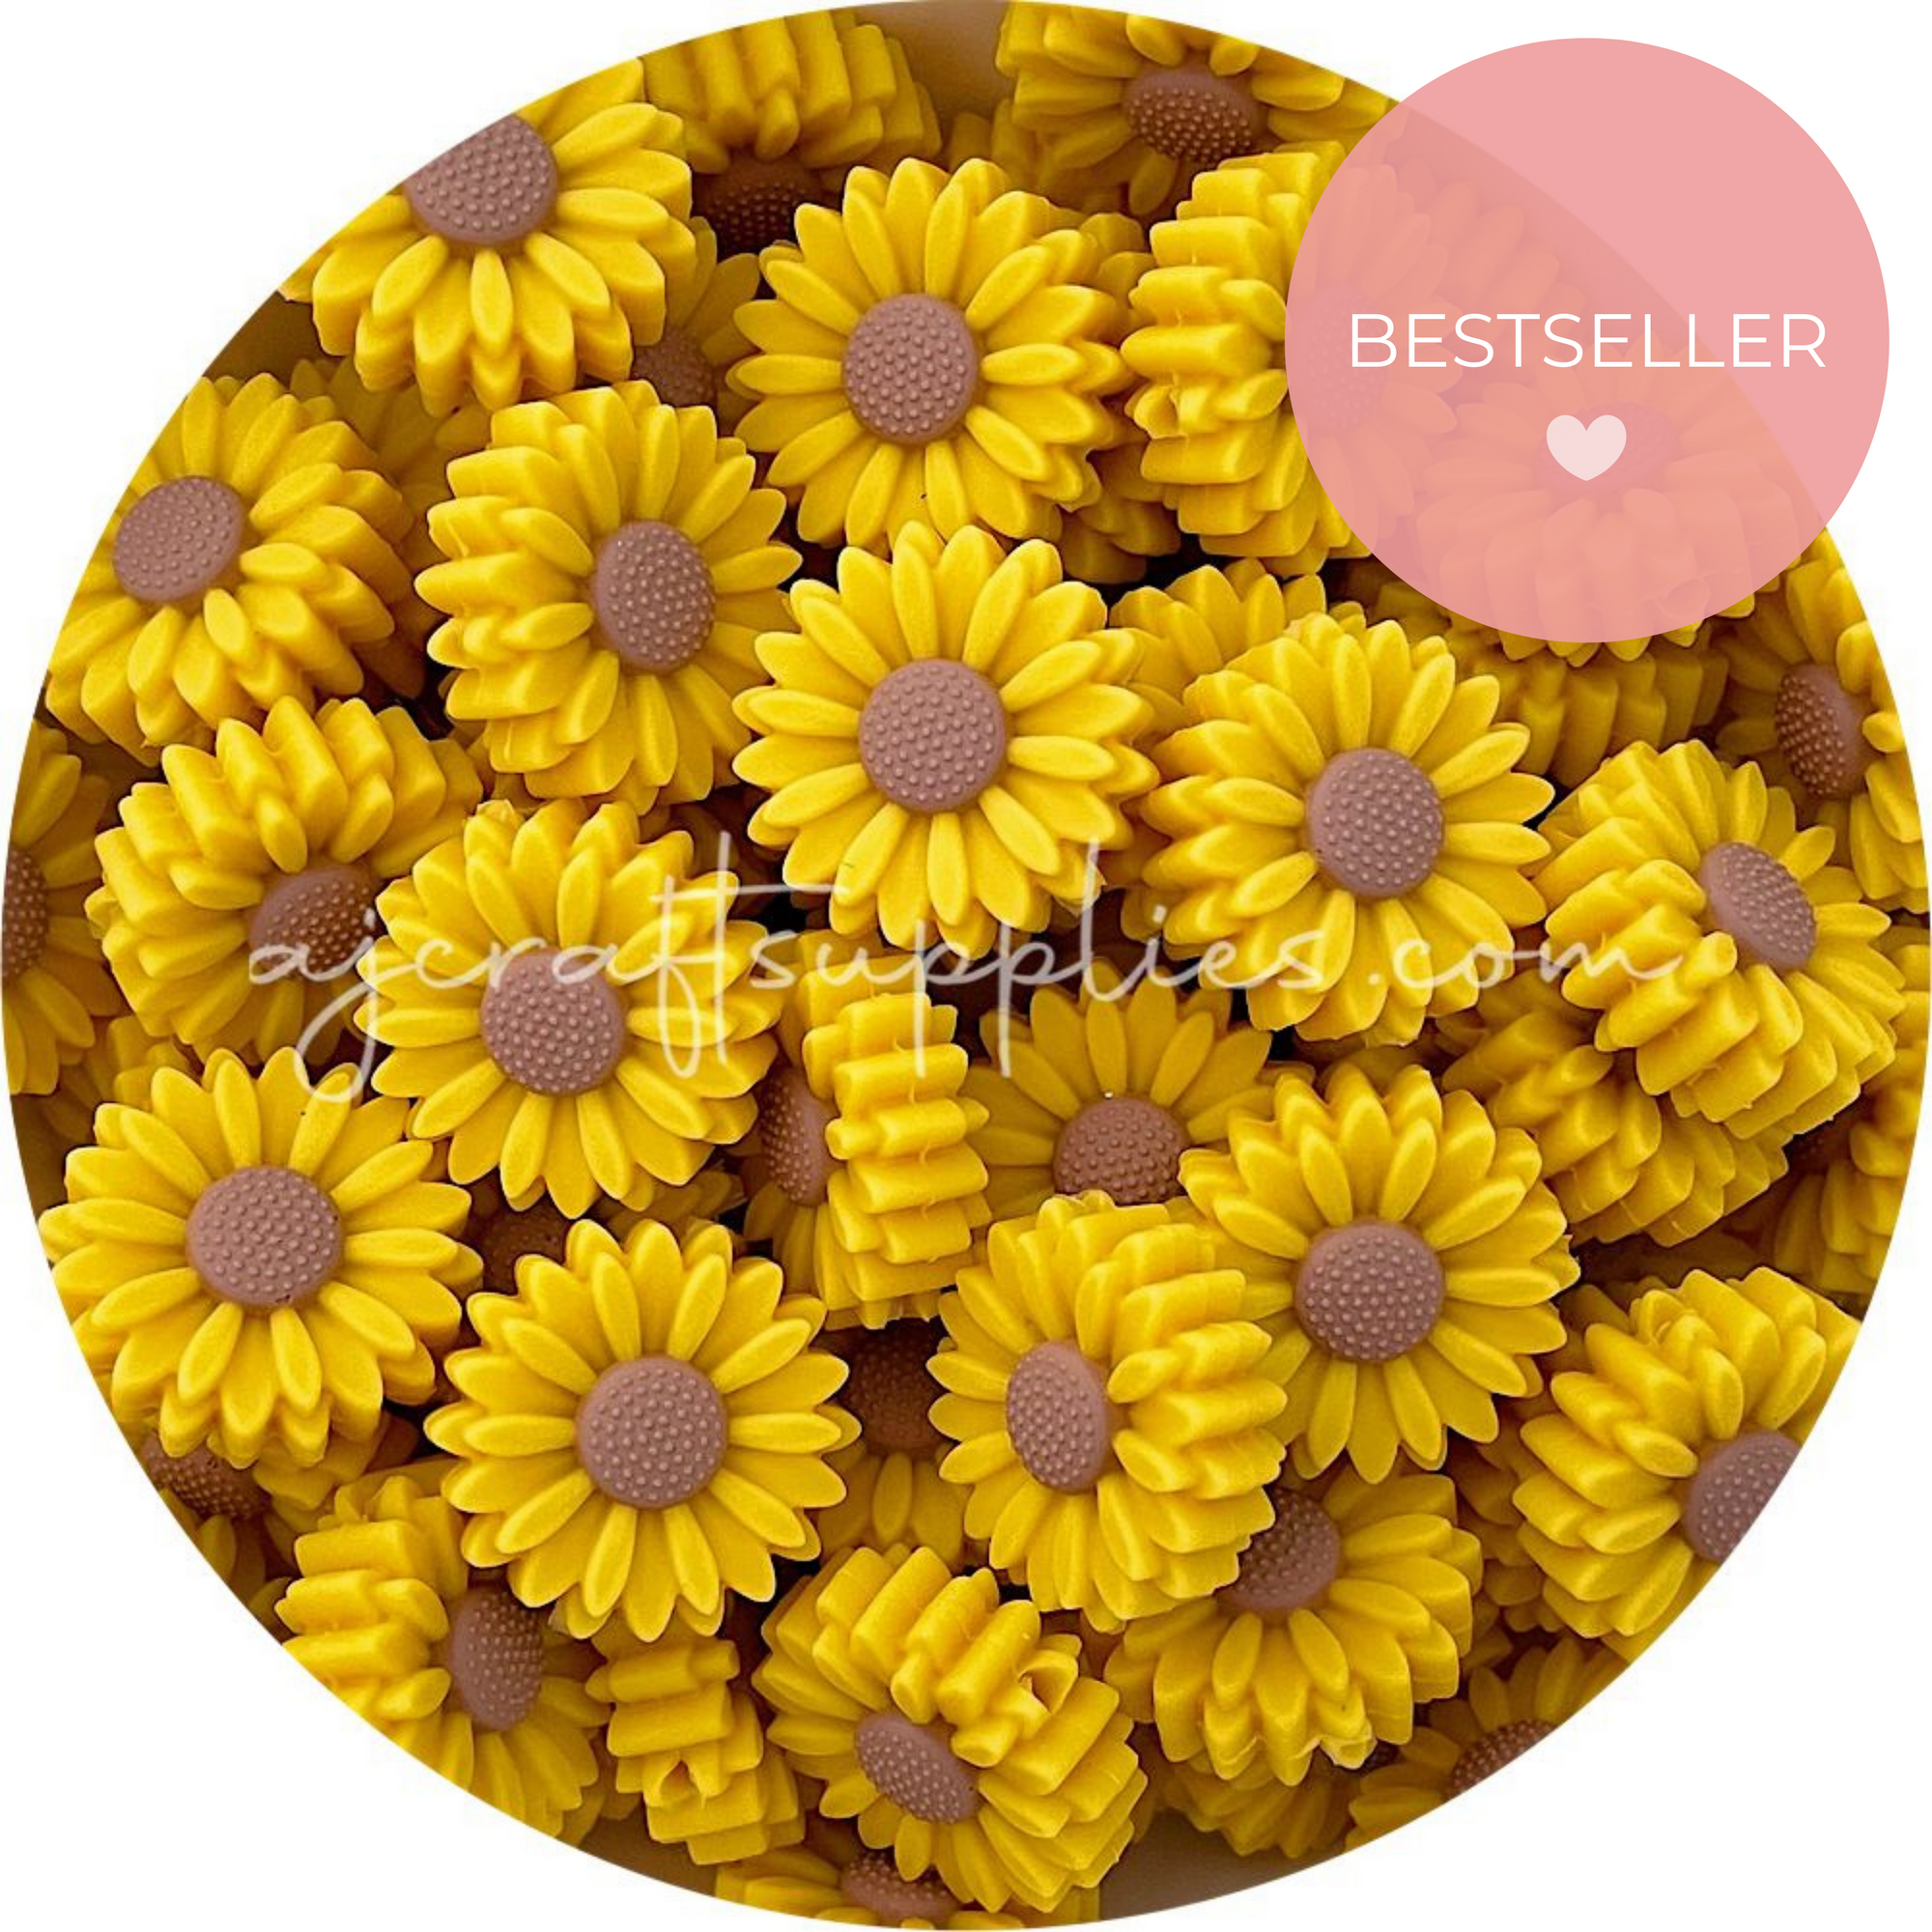 Mustard Yellow - 22mm Mini Daisy/Sunflower Silicone Beads - 2 beads